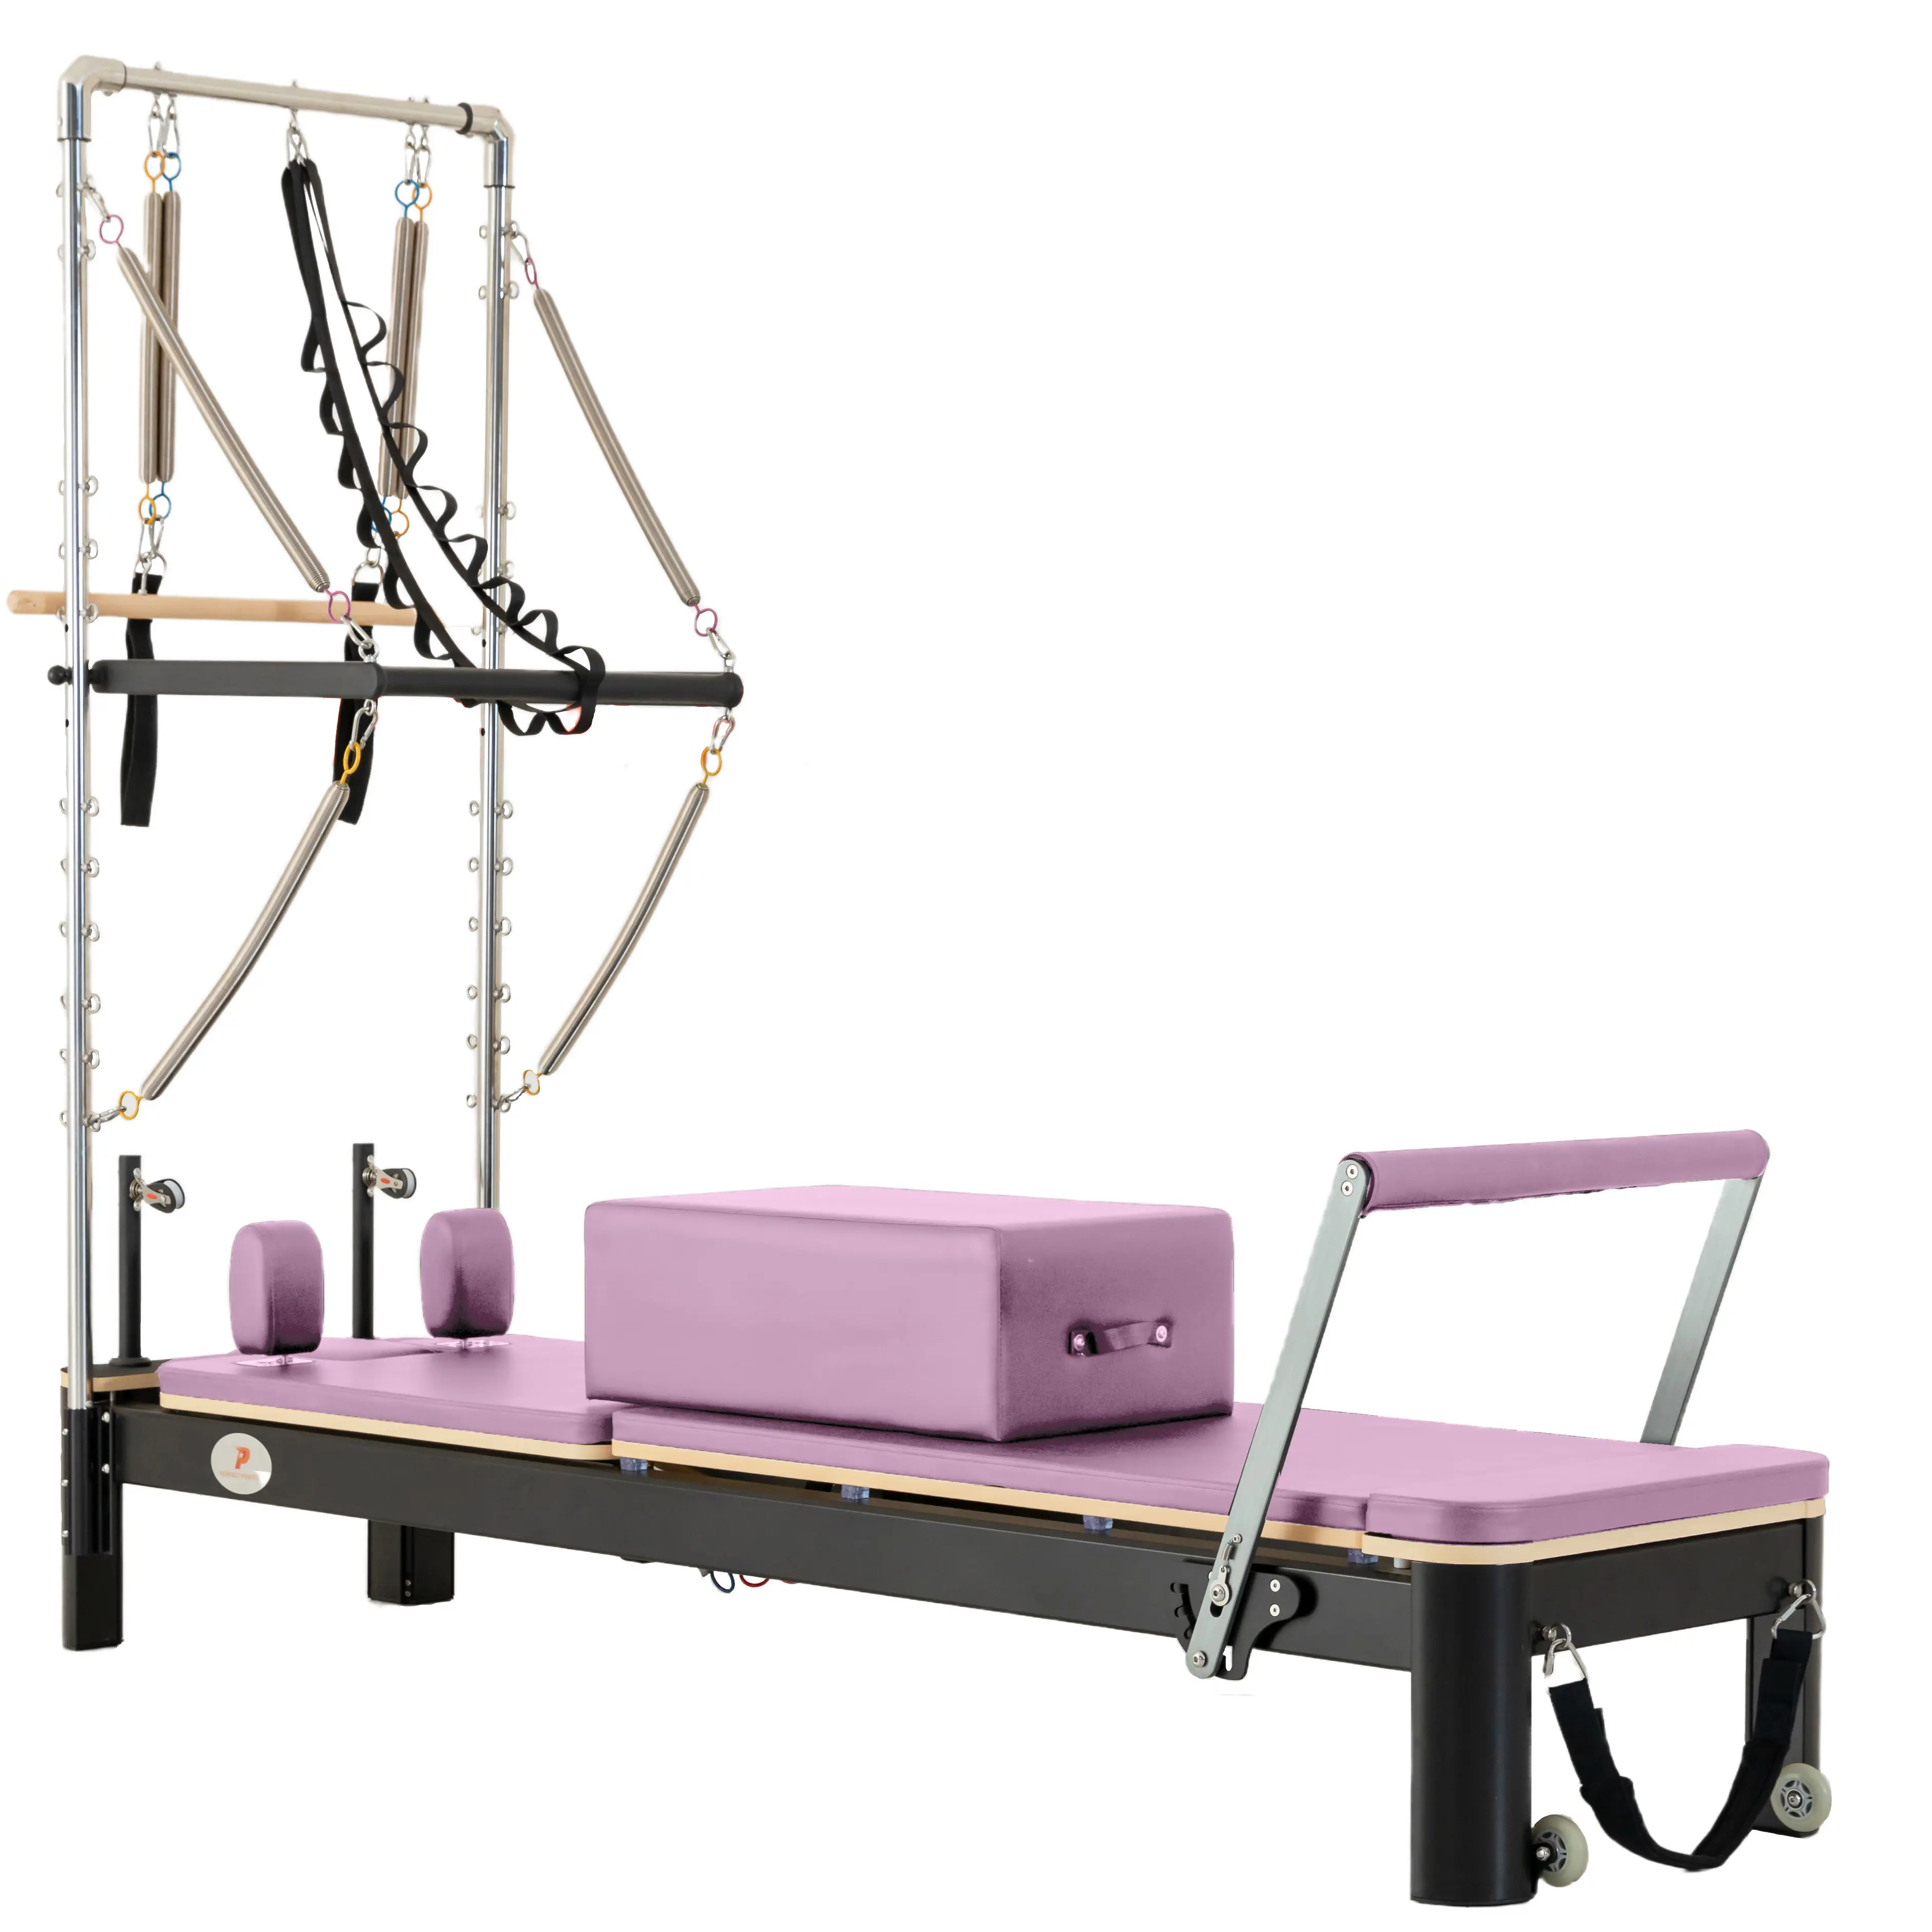 Mesin latihan yoga rumah komersial rembes aluminium merah muda setengah trapeze menara pilates